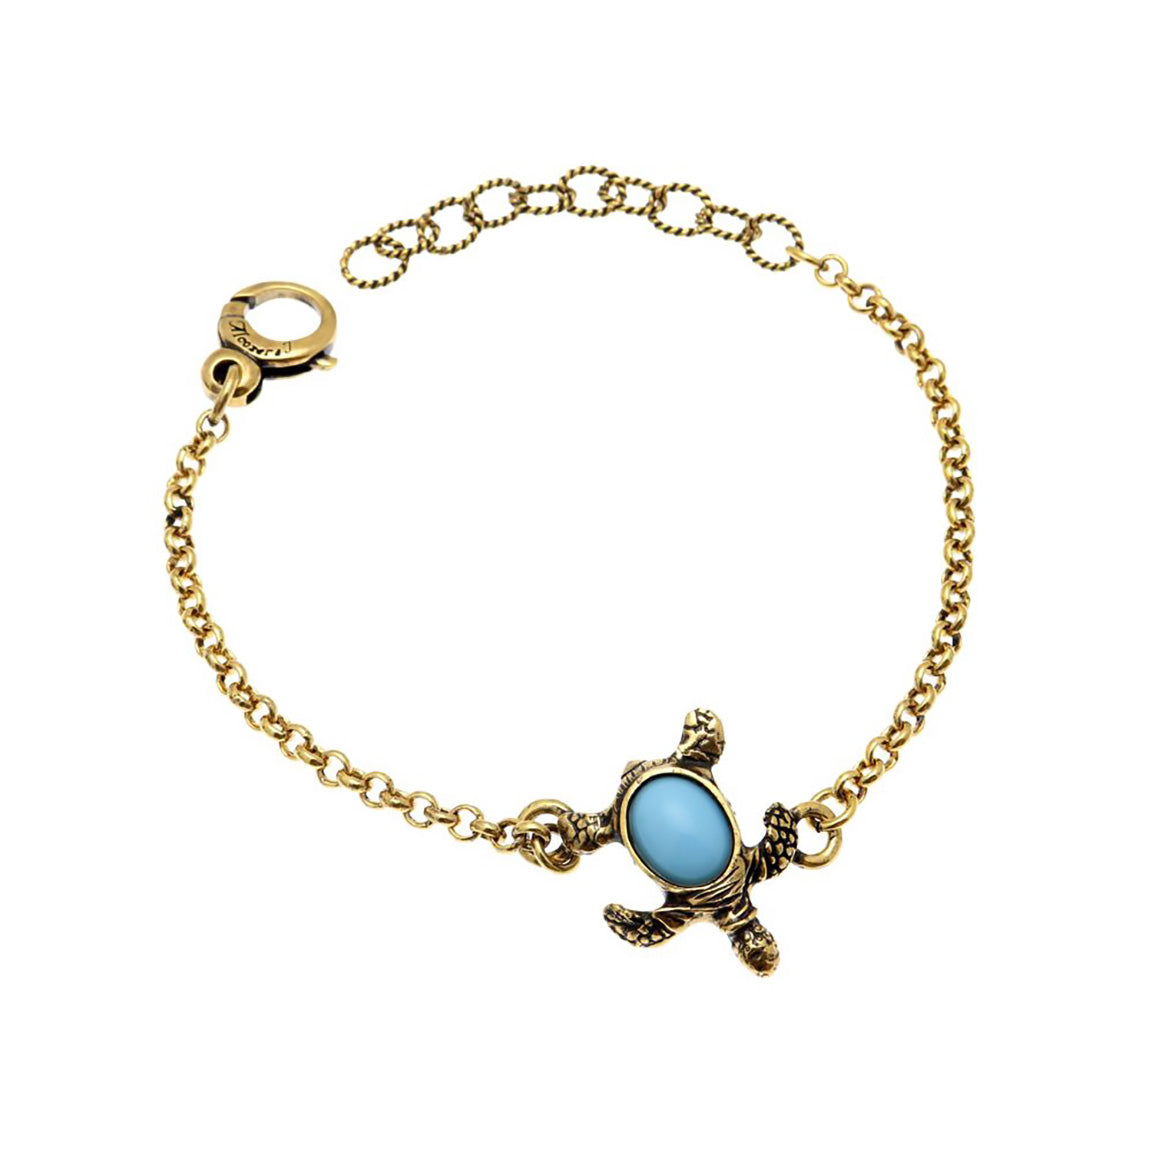 Alcozer Turtle Chain Bracelet / Golden Brass, Turquoise Paste / Delicate Jewelry